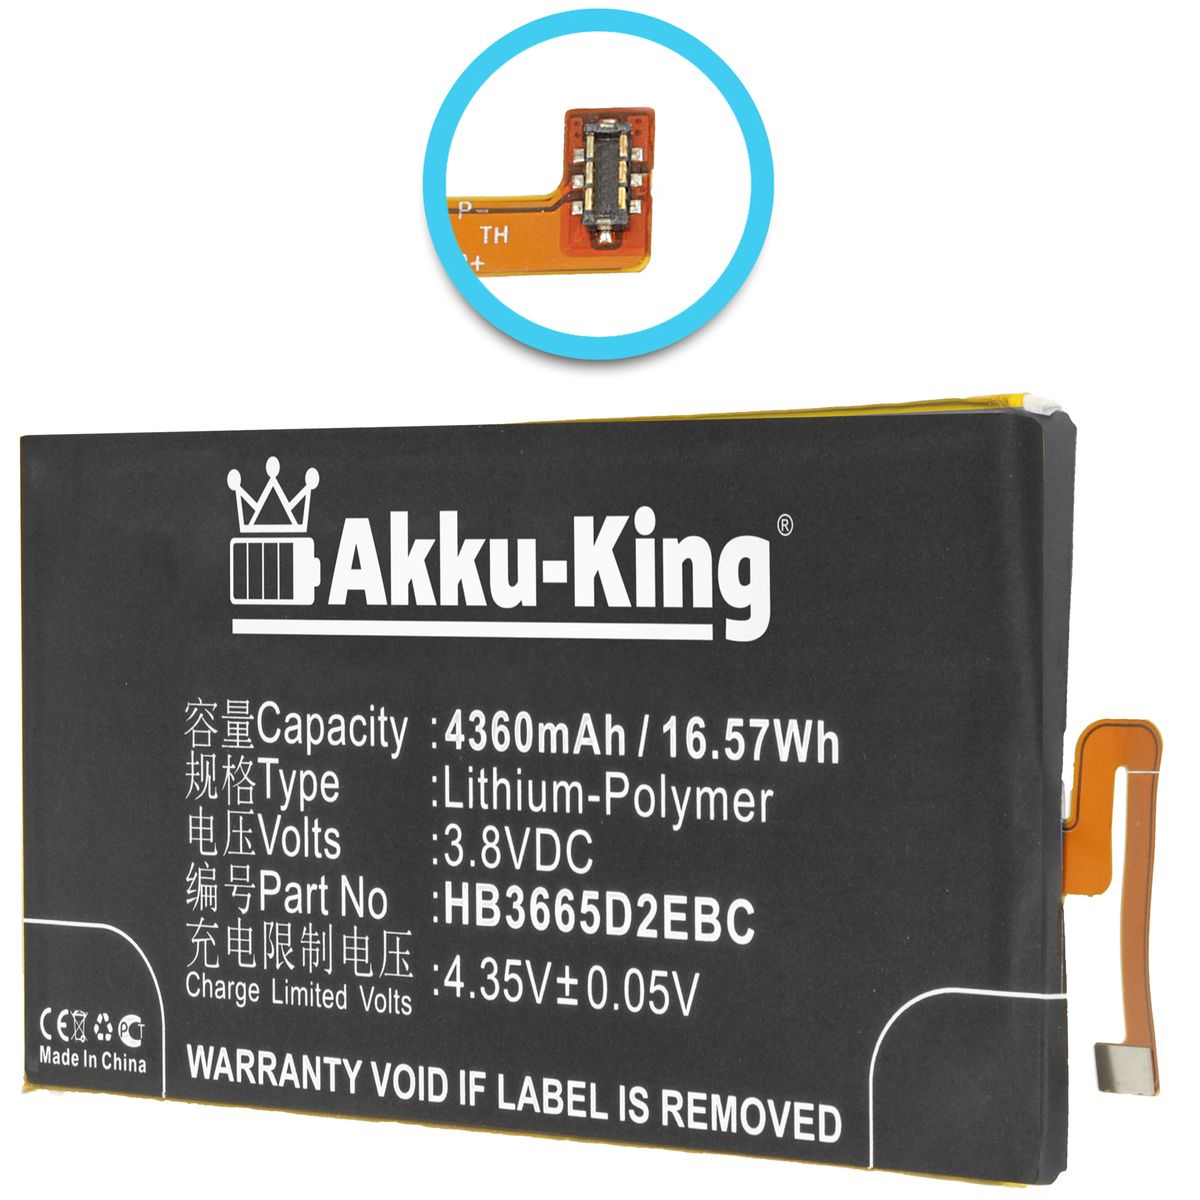 AKKU-KING Akku 3.8 Handy-Akku, 4360mAh HB3665D2EBC Volt, Li-Polymer kompatibel Huawei mit